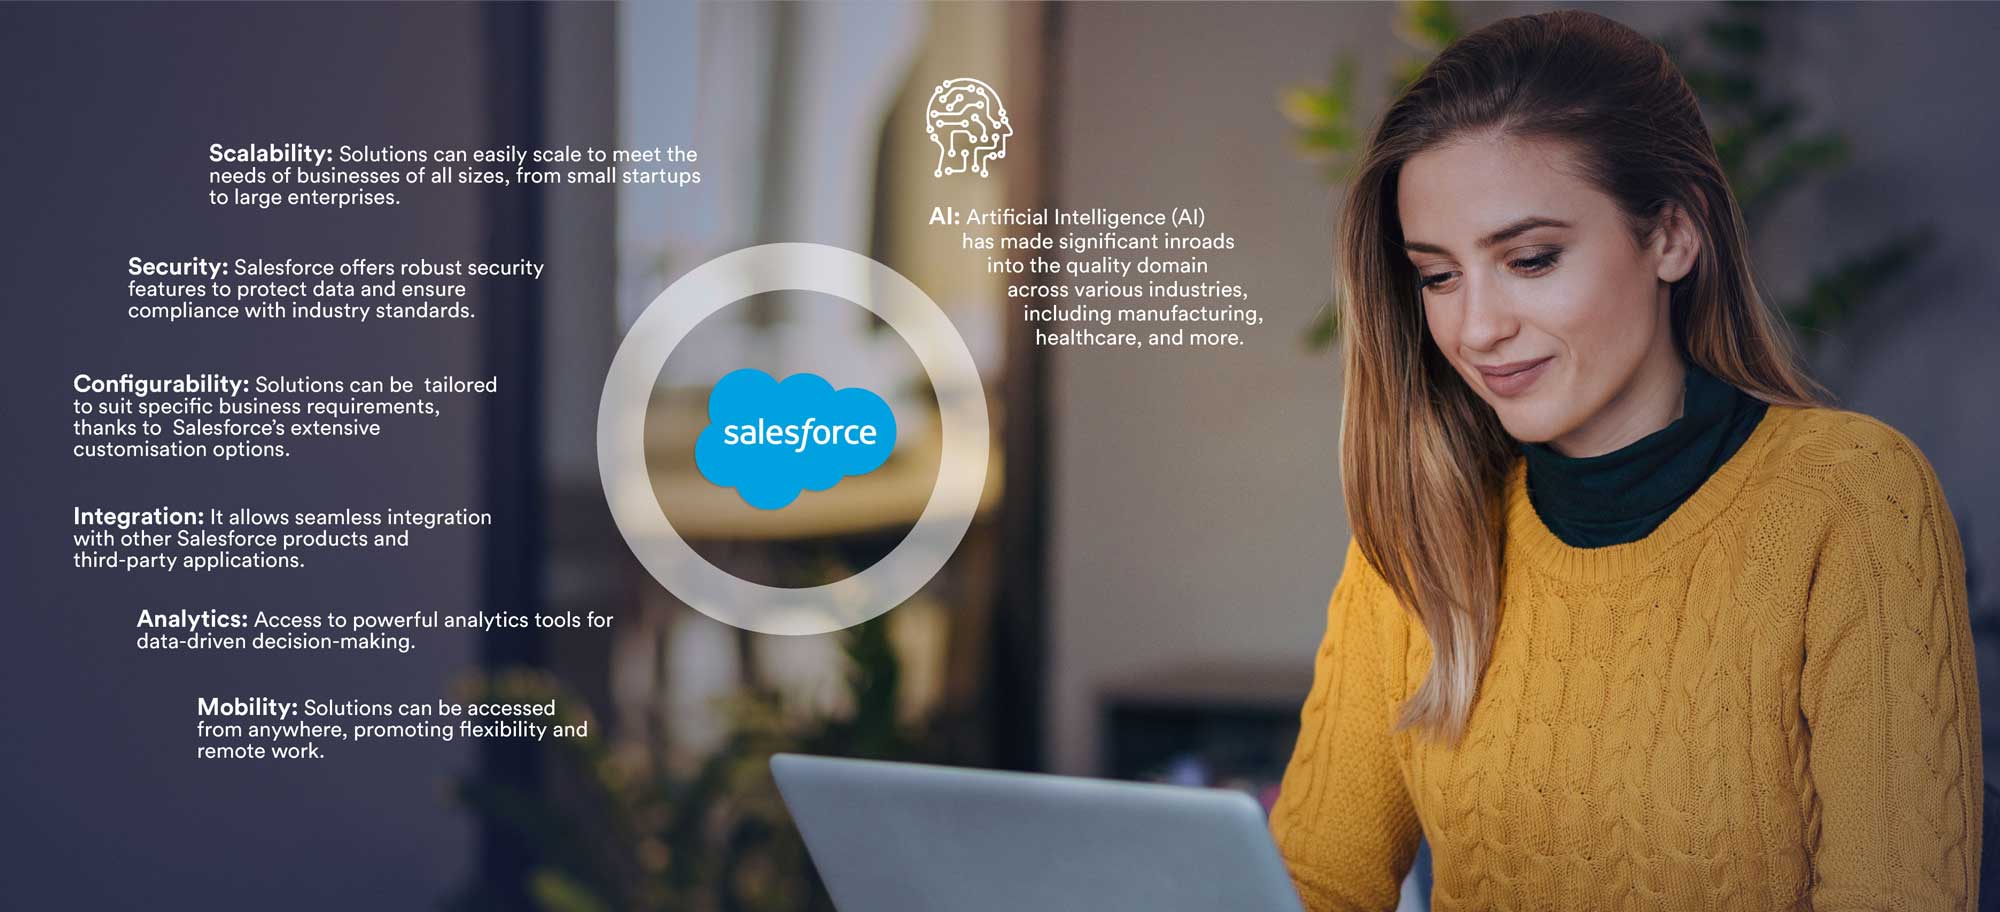 Perfect choice of technology platform - Salesforce